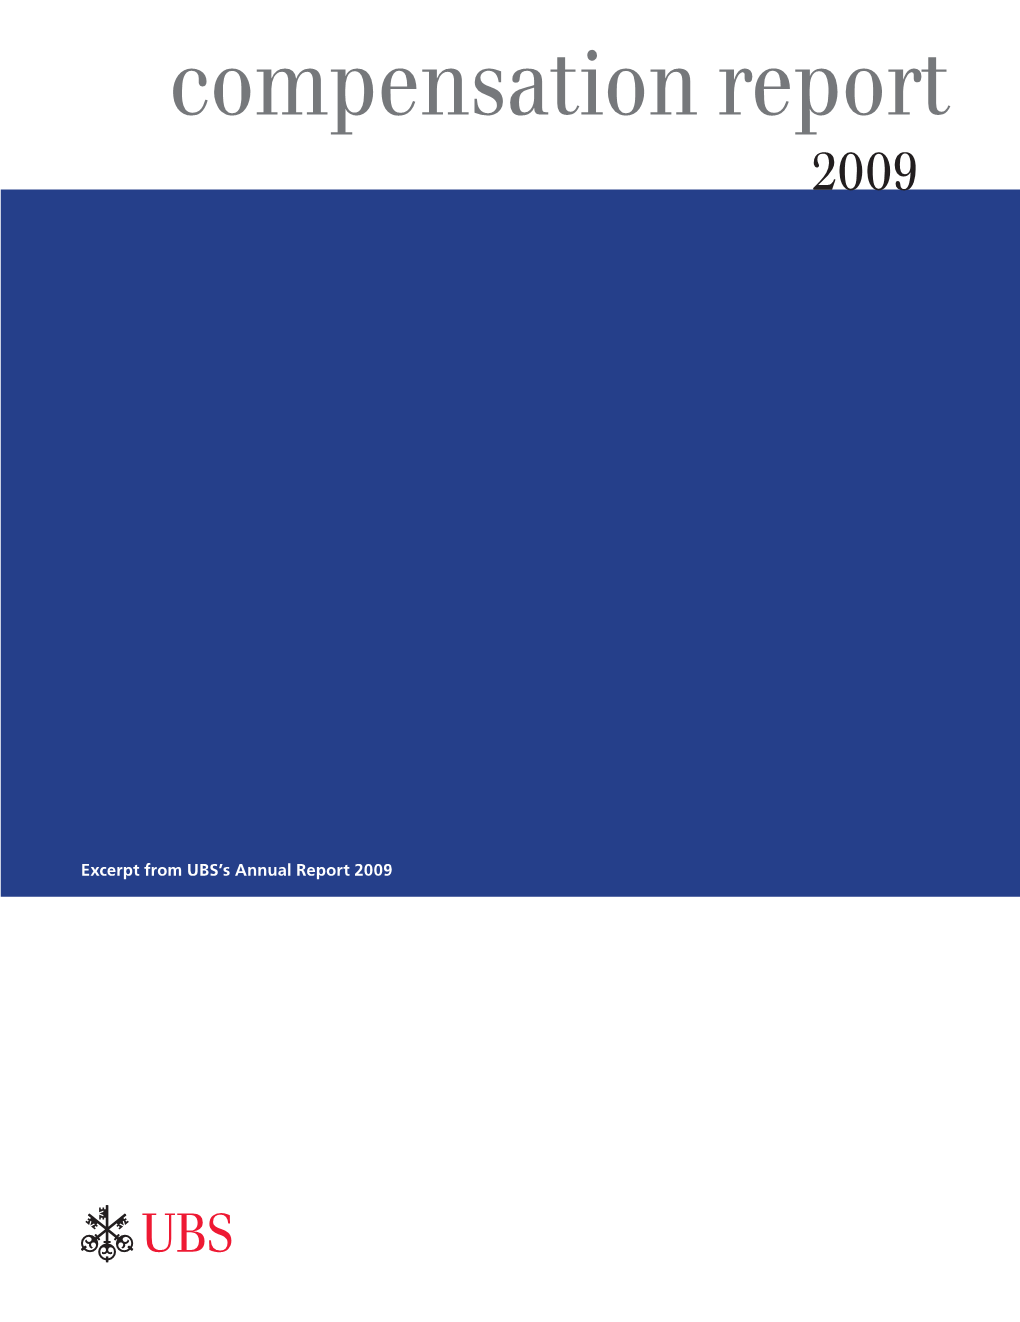 UBS Compensation Report 2009